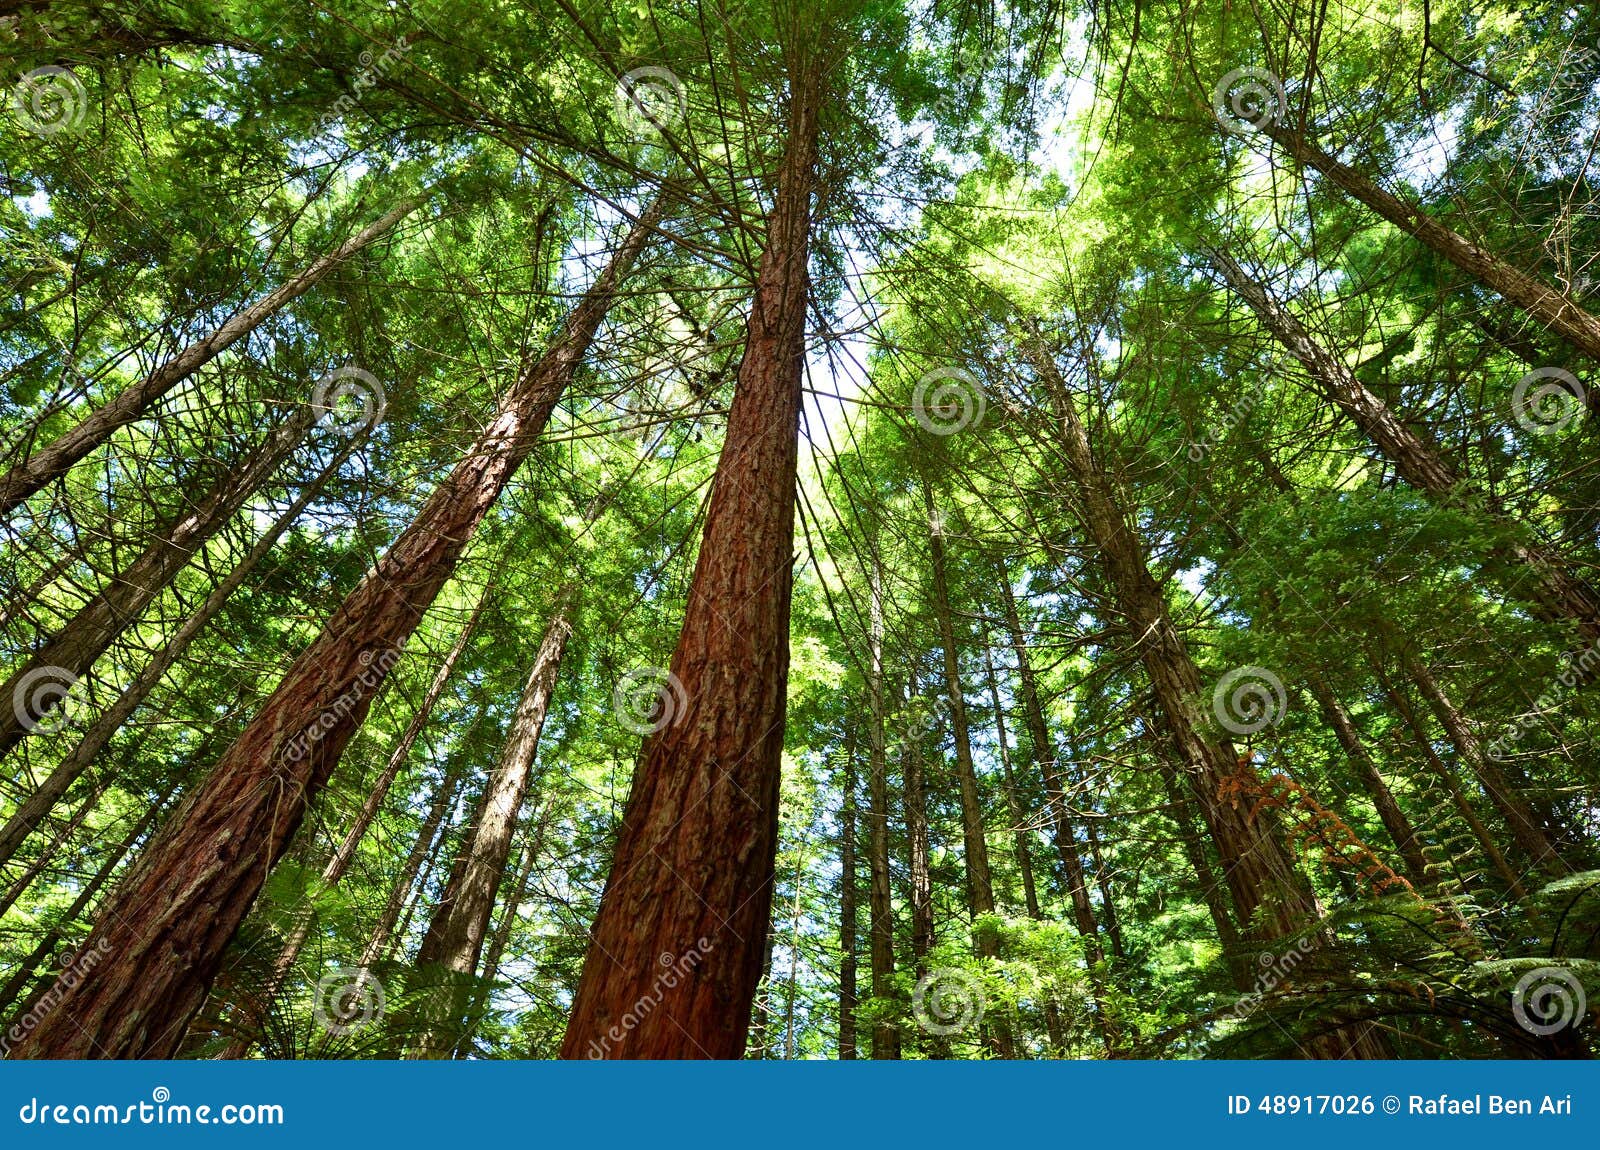 redwoods in rotorua new zealand